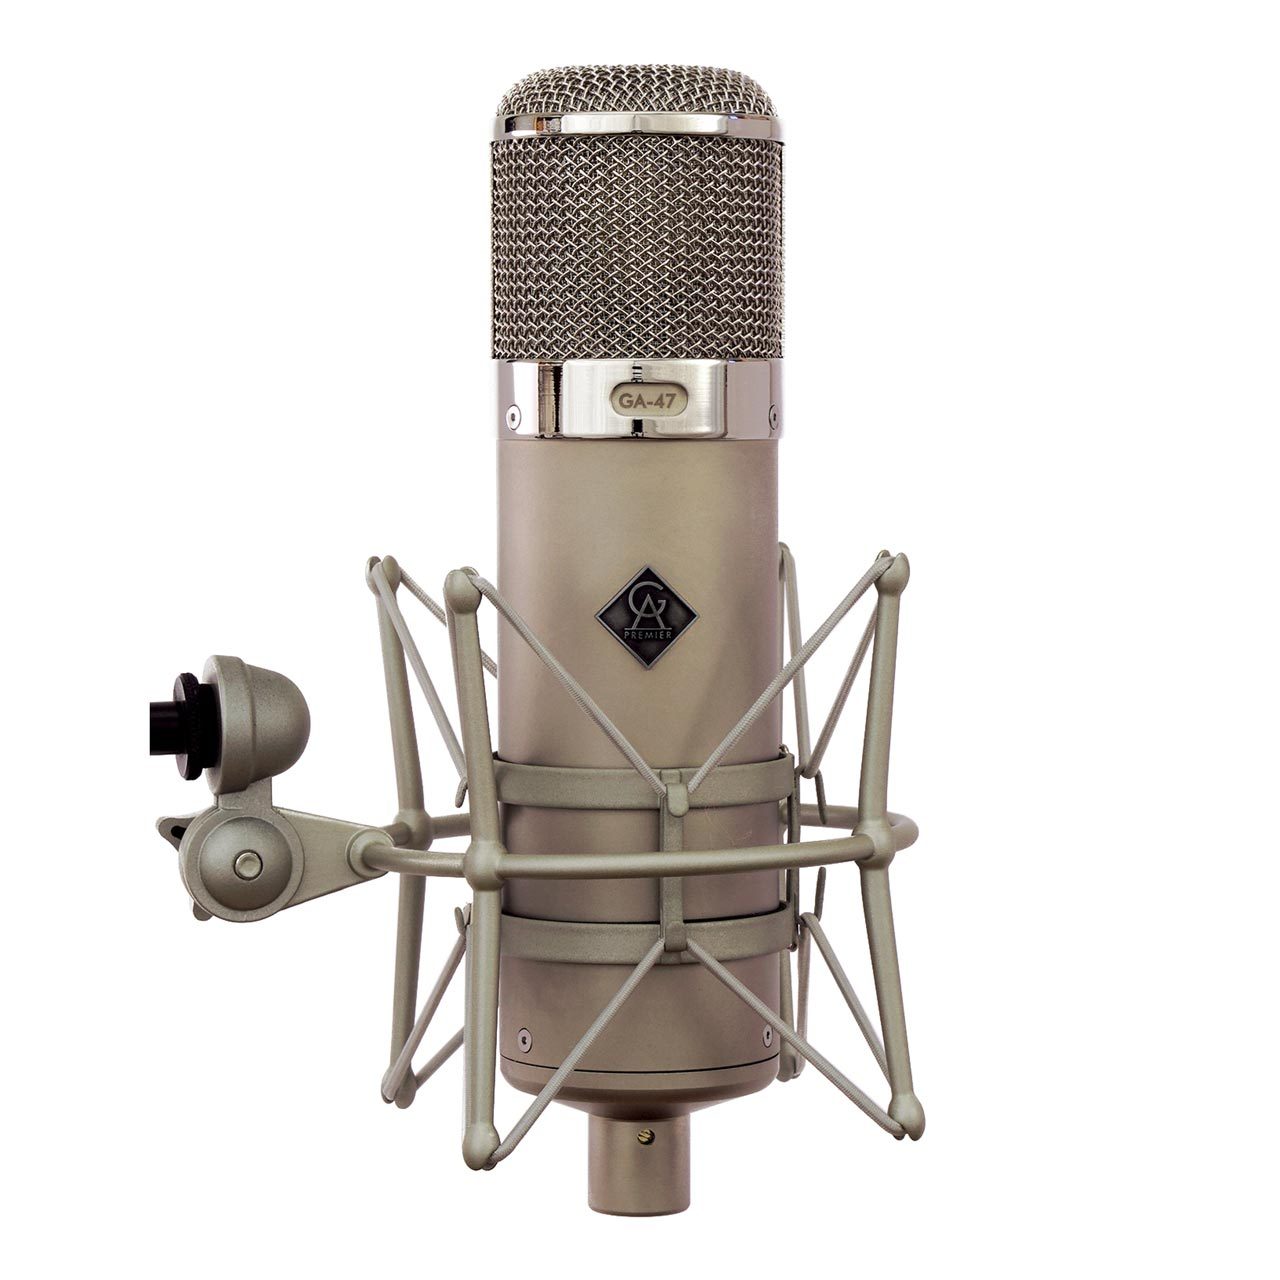 Tube Microphones - Golden Age Premium GA-47 Large Diaphragm Tube Condenser Microphone